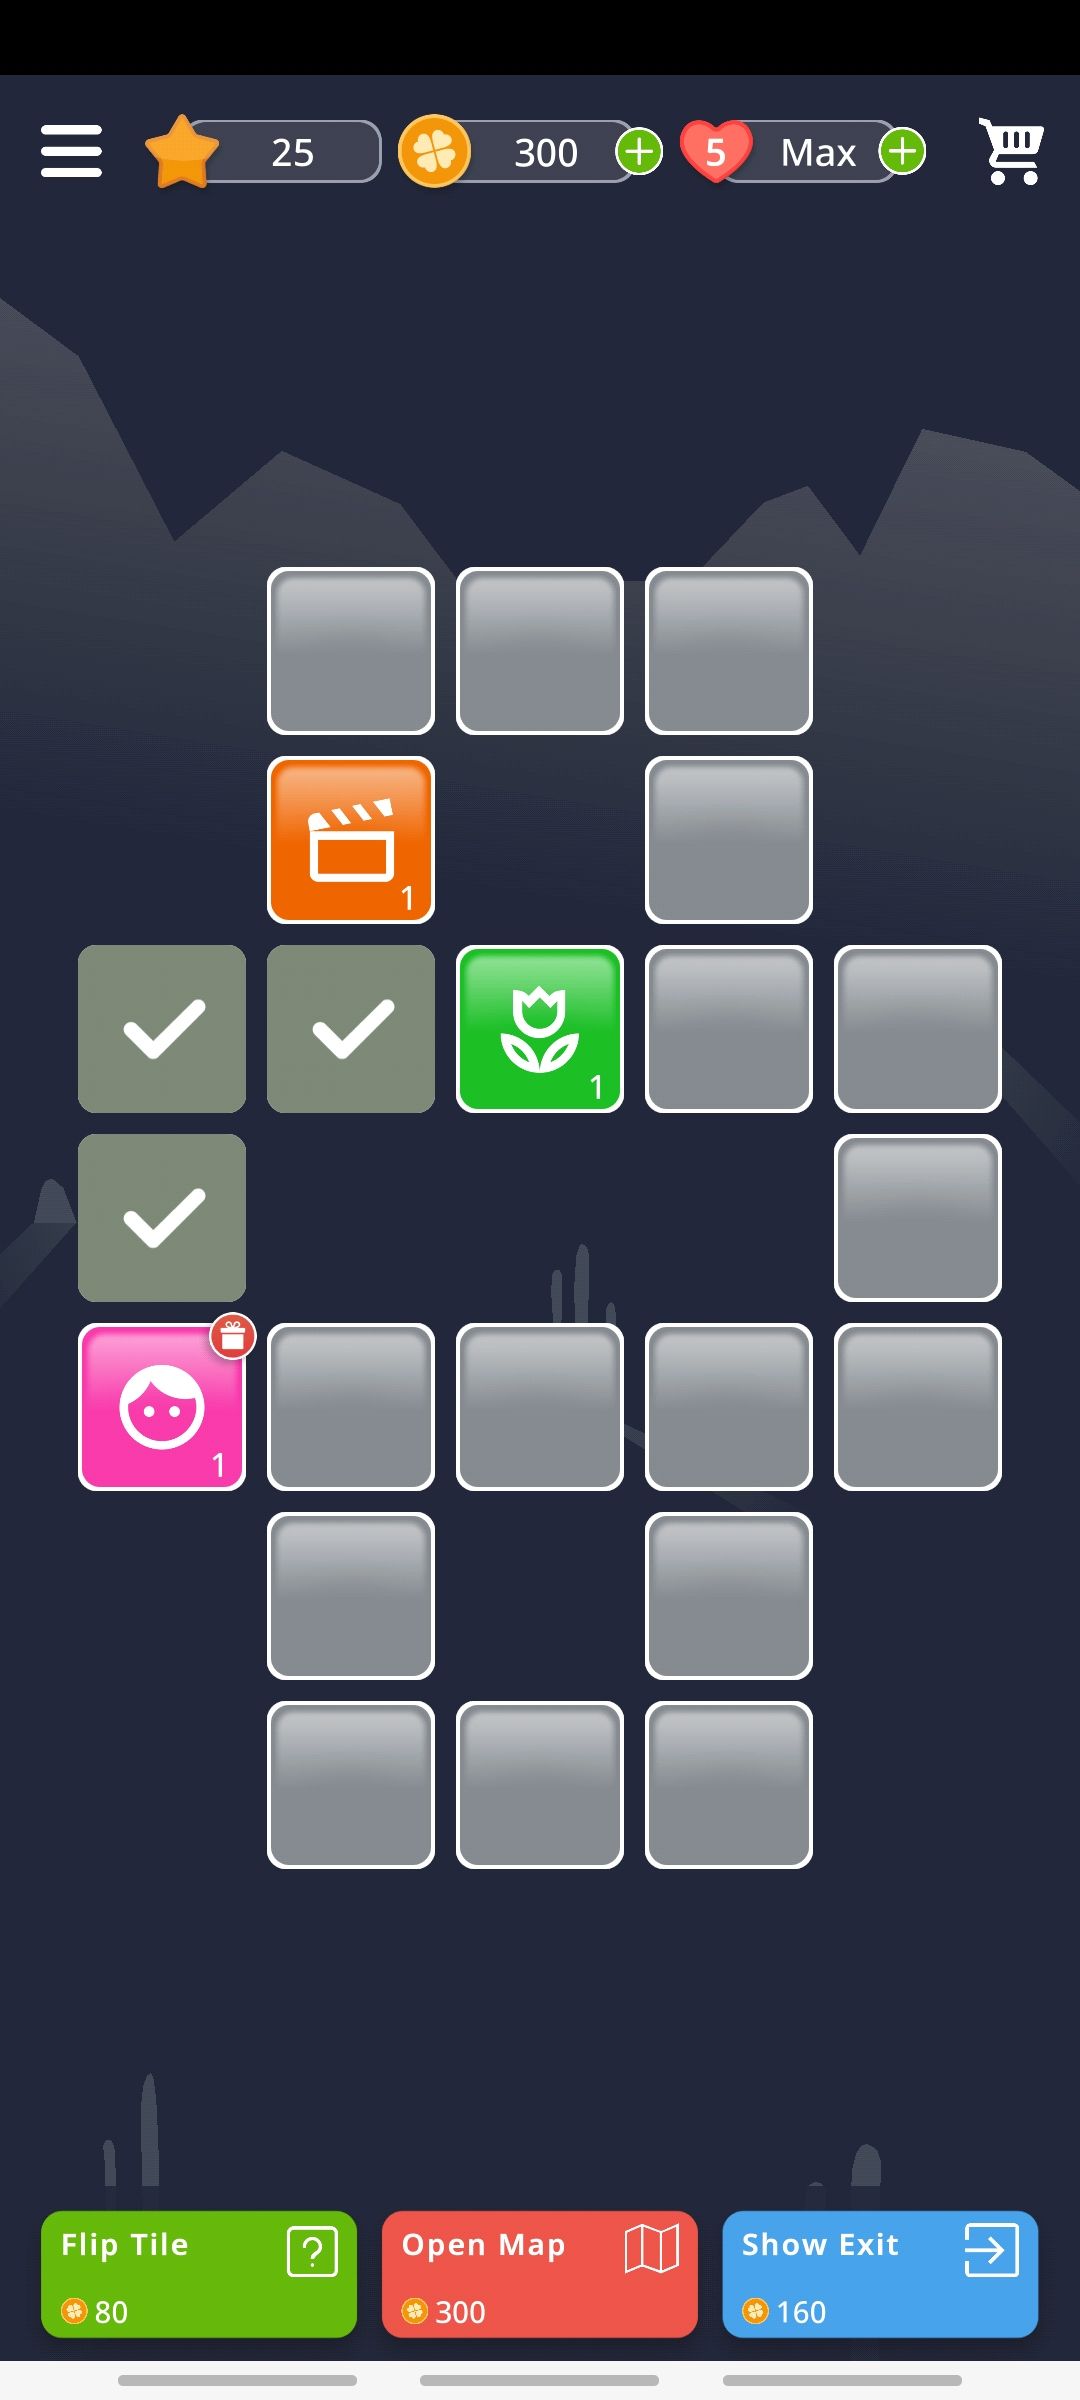 quizzland app showing a unique level with different question categories